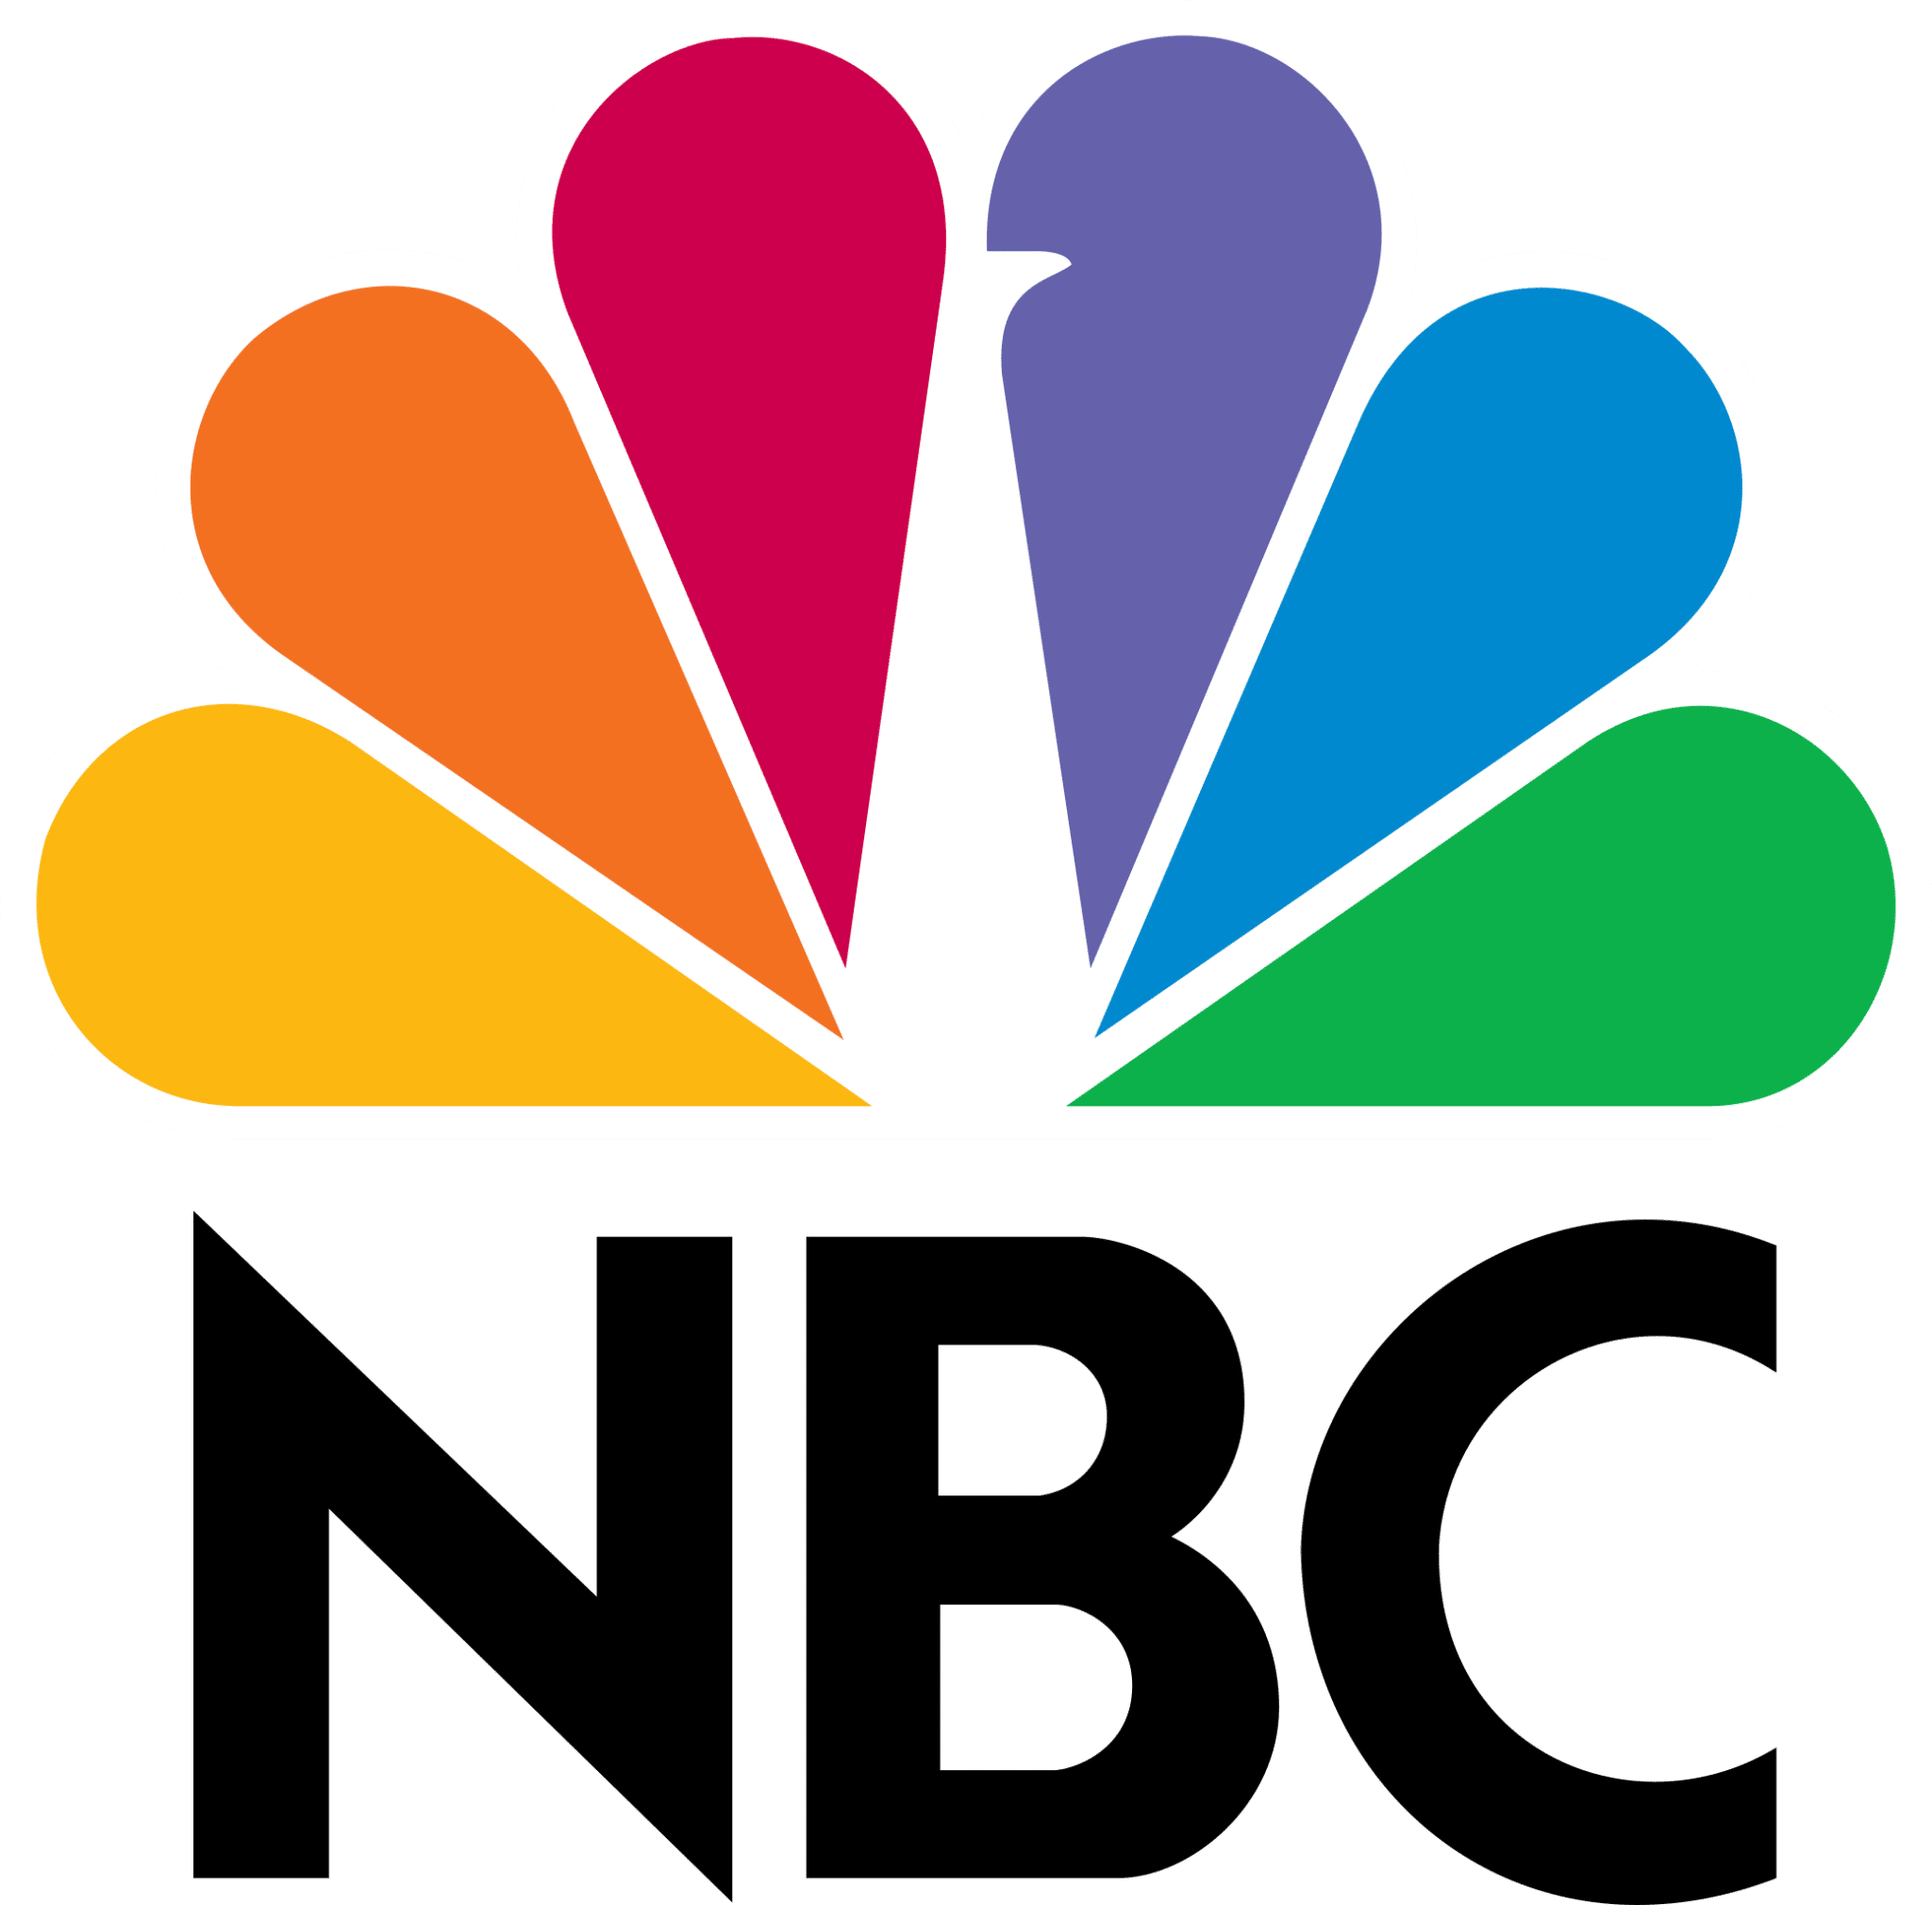 Logo NBC USA